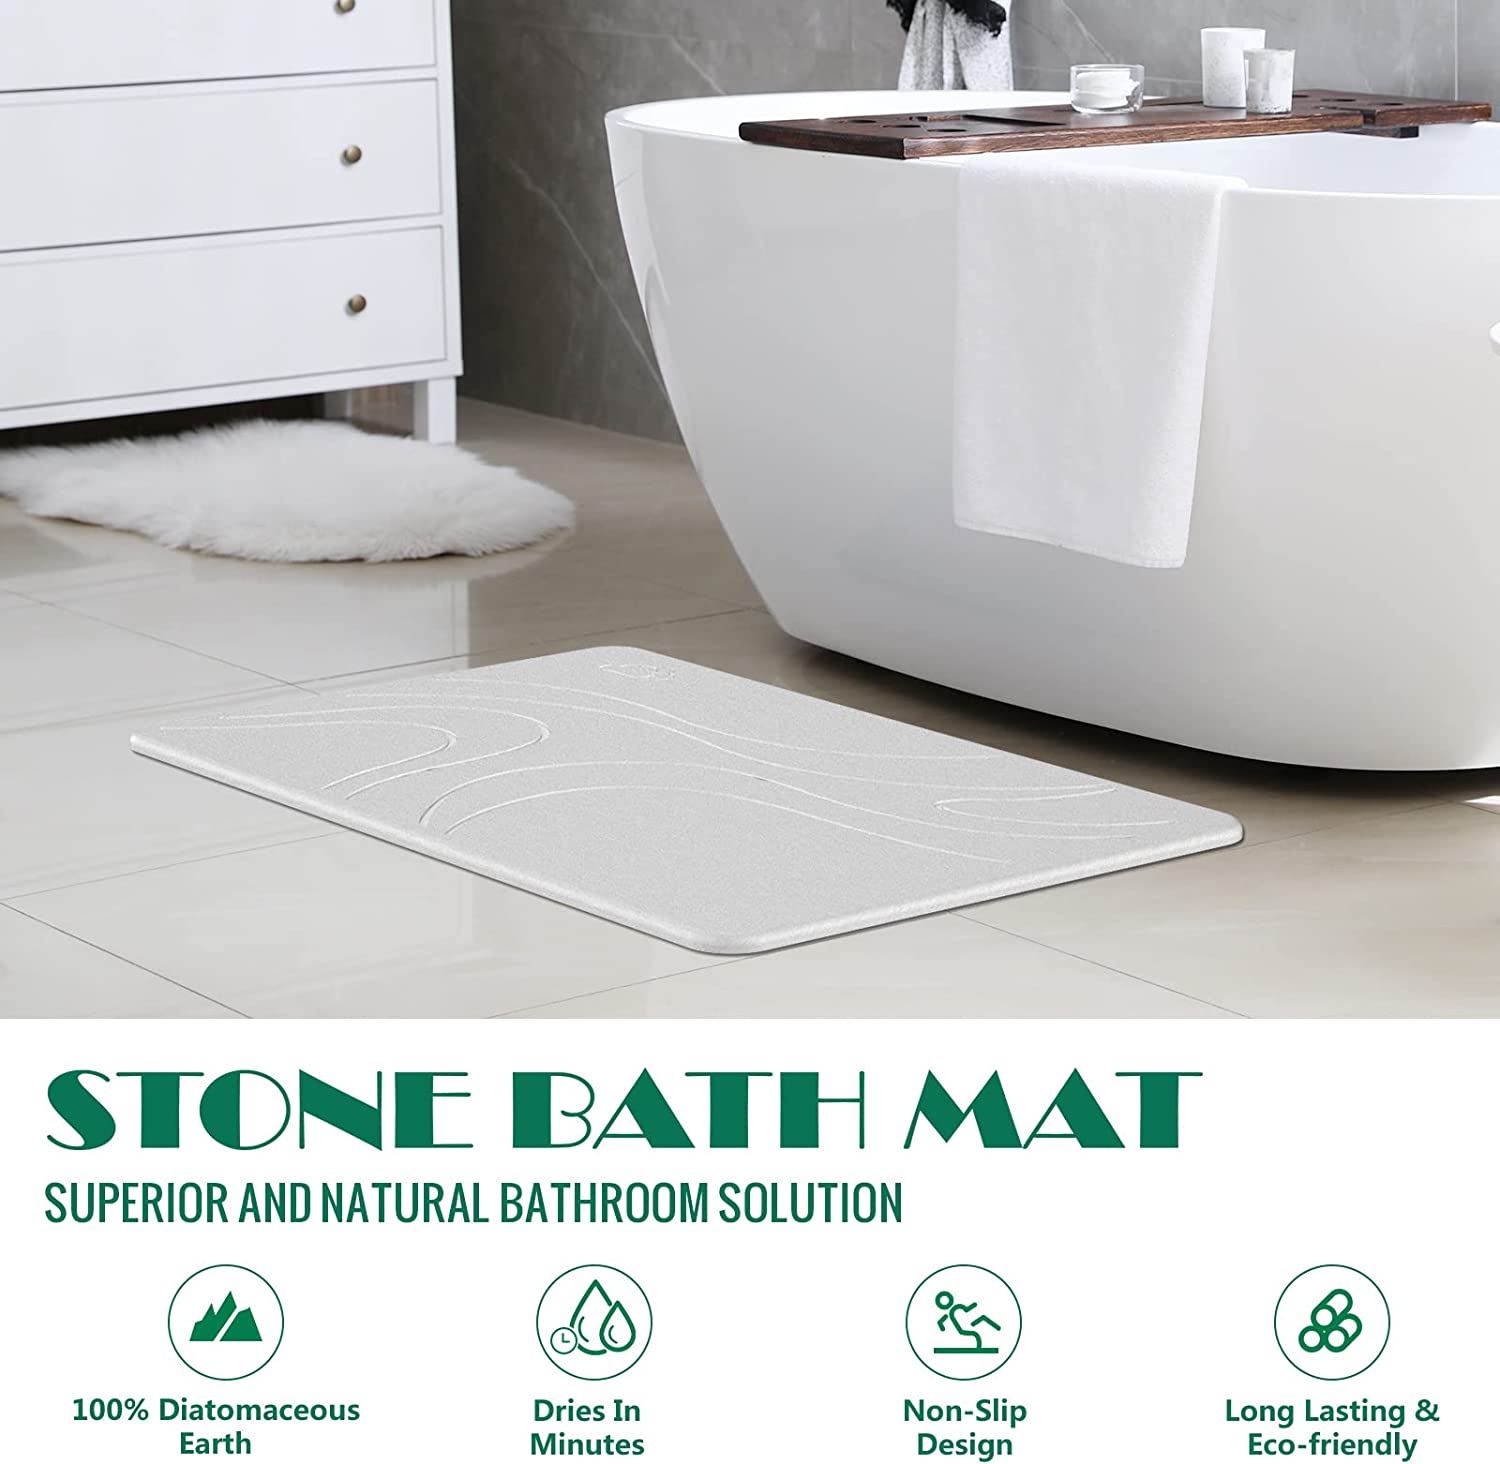 Shop this stone bath mat and say goodbye to soggy bath mats